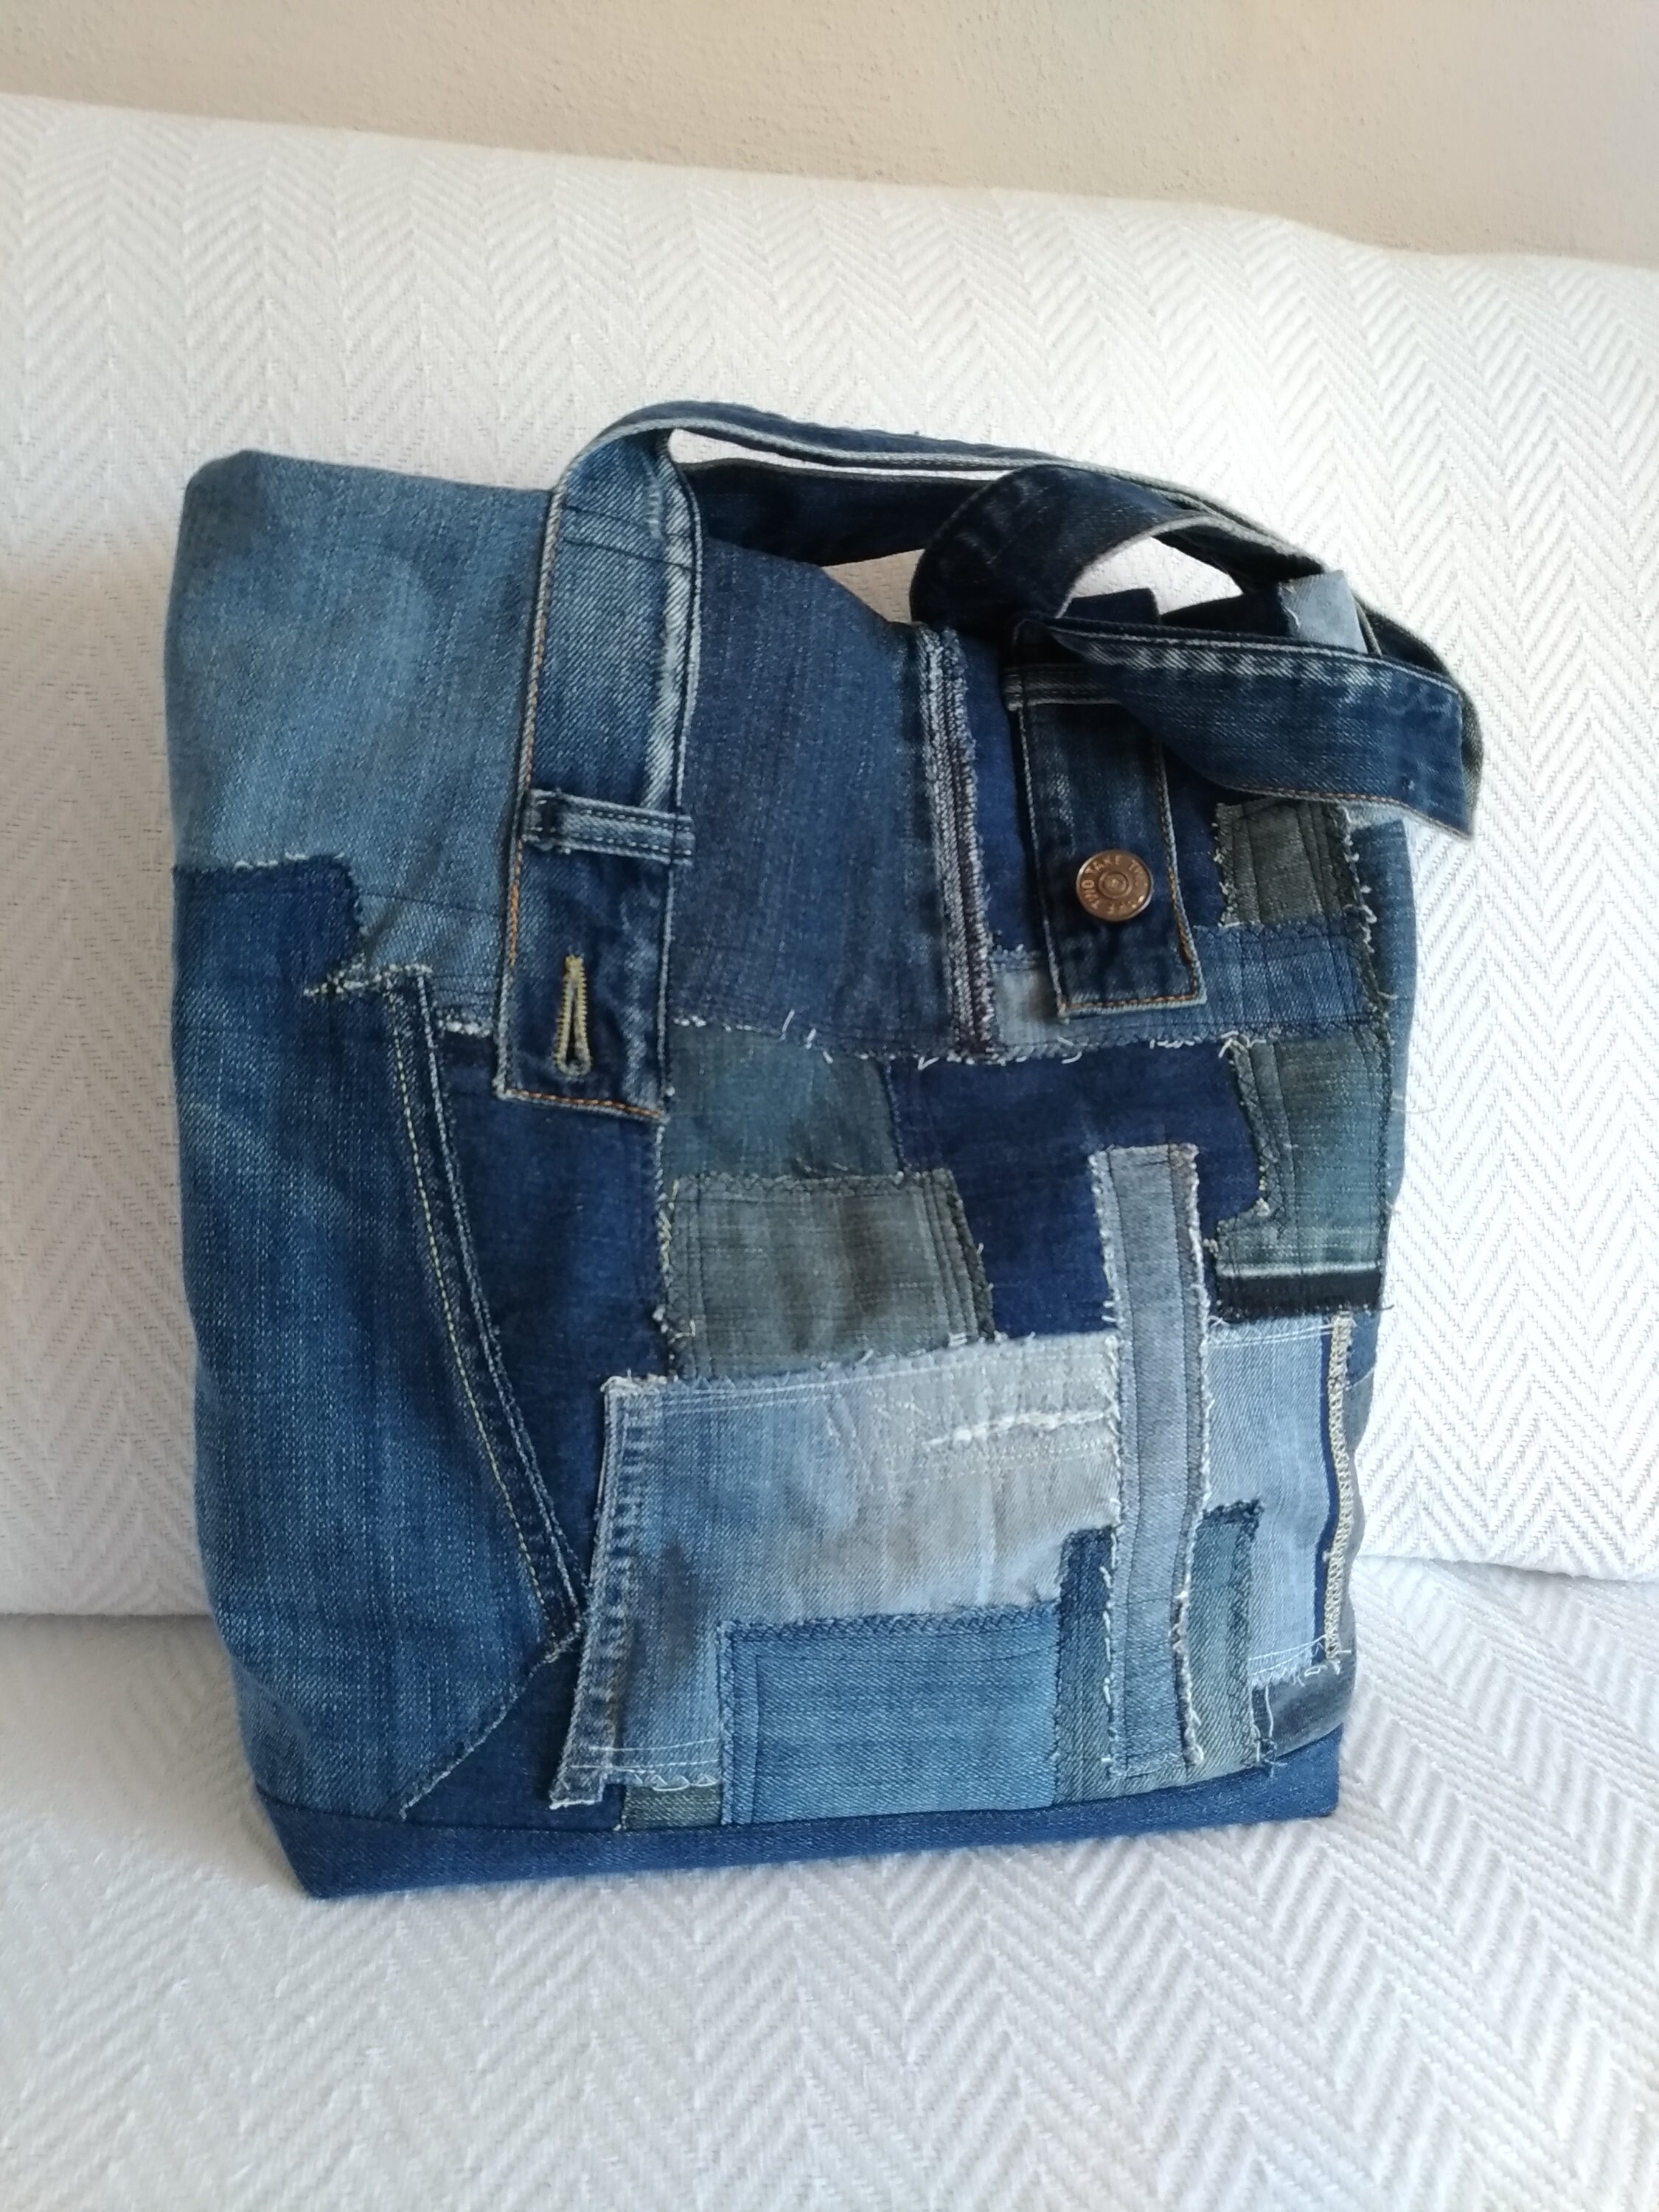 Patchwork Denim Tote Bag Upcycled Denim Bag Recycled Jeans | Etsy